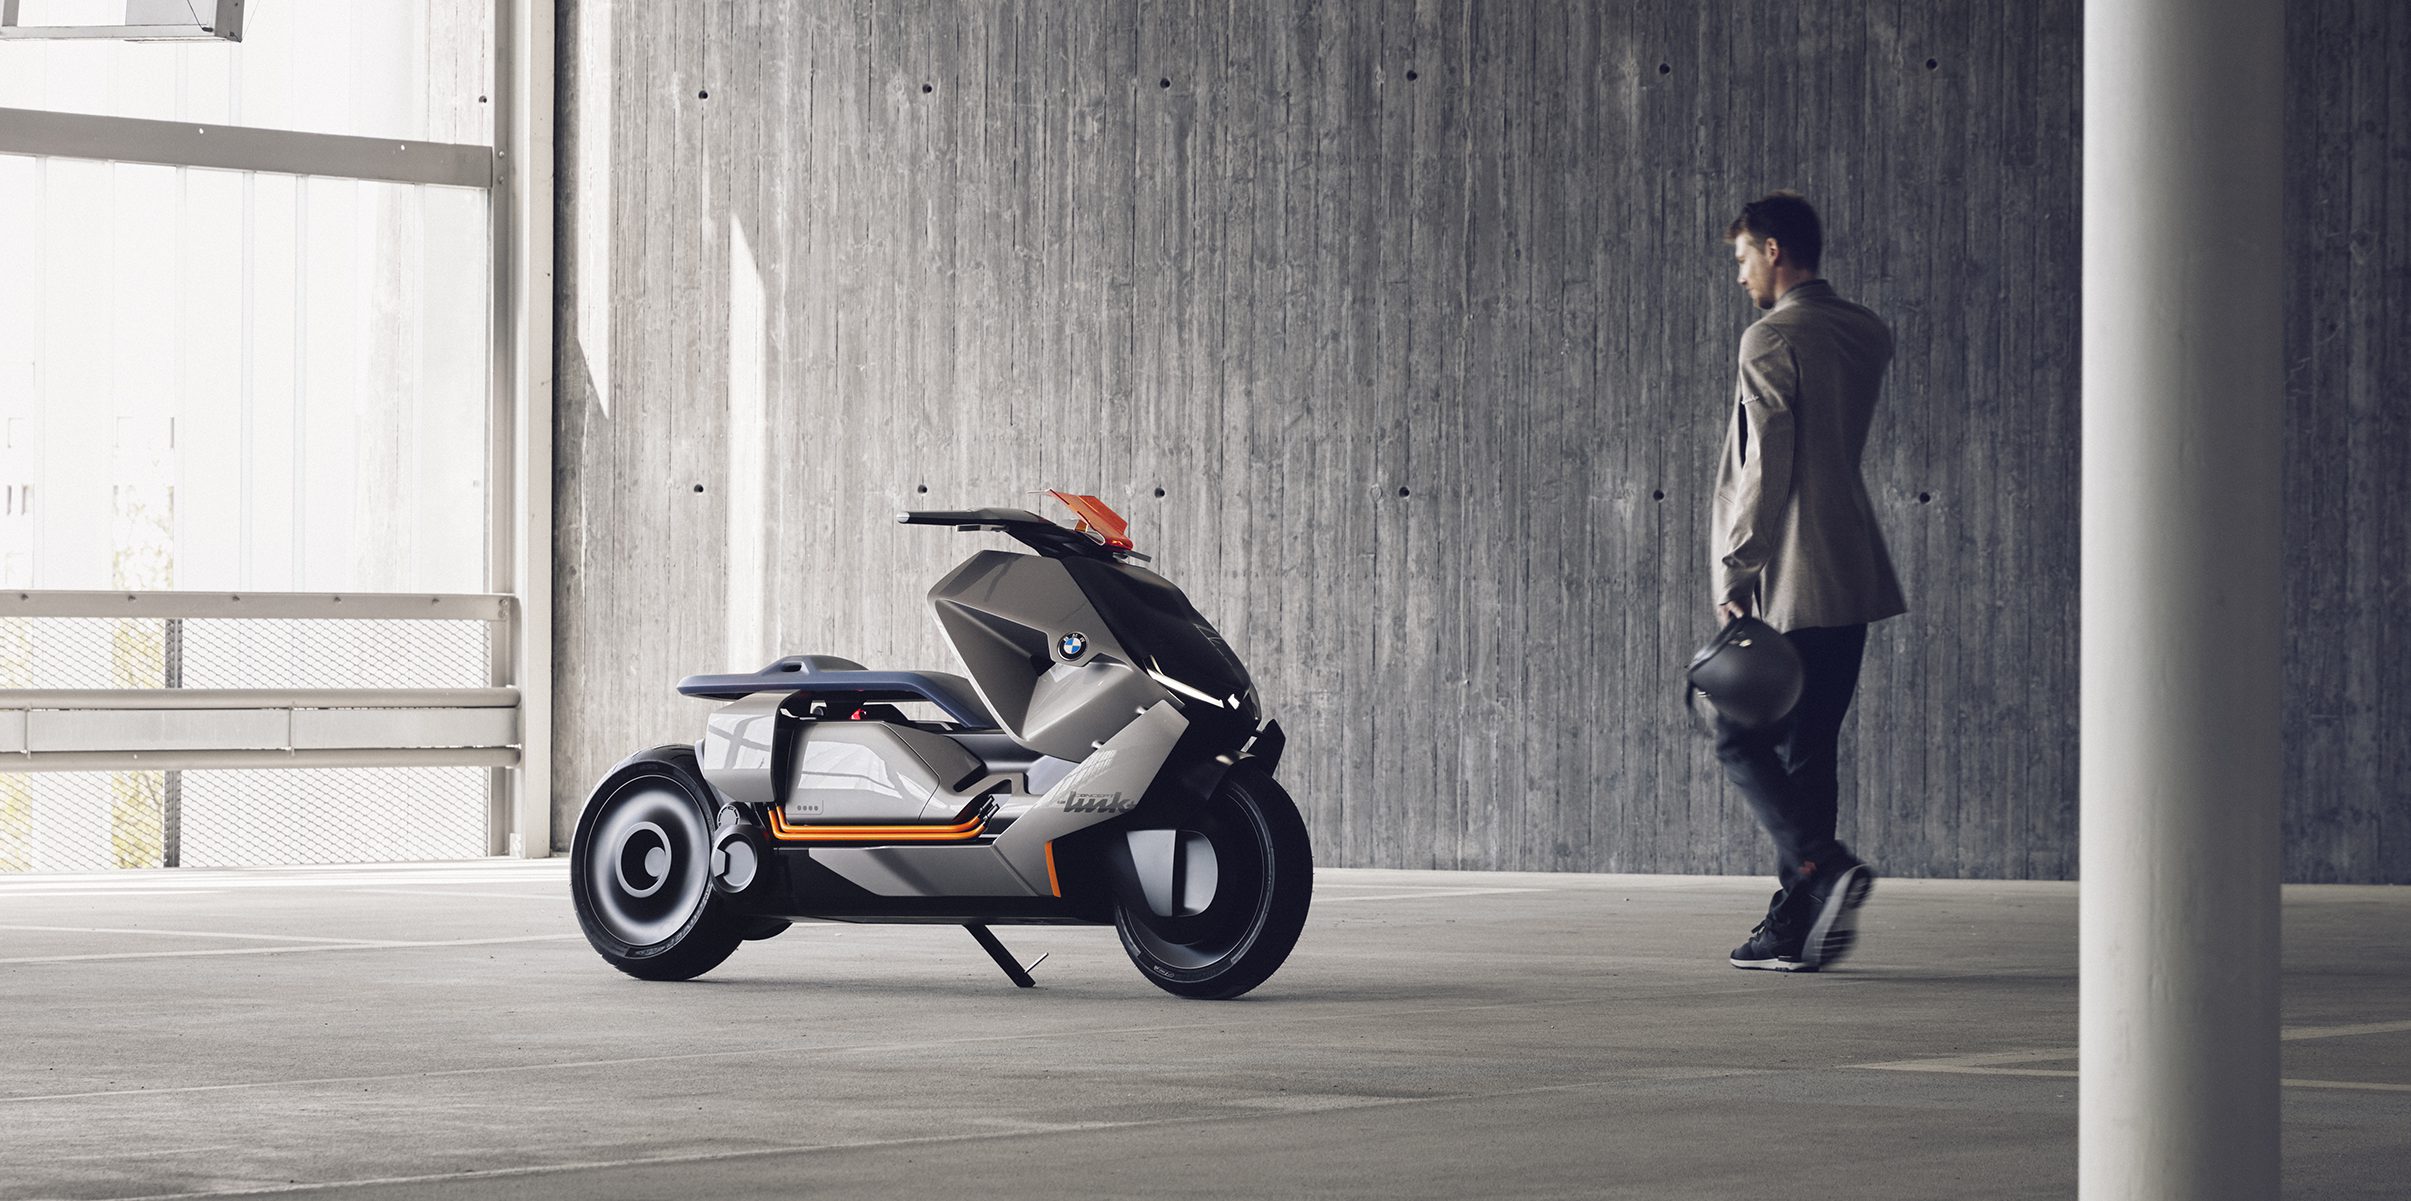 Скутер холл. BMW Electric Scooter. Электроскутер BMW ce 04. BMW Motorrad Concept. Электроскутер BMW концепт.